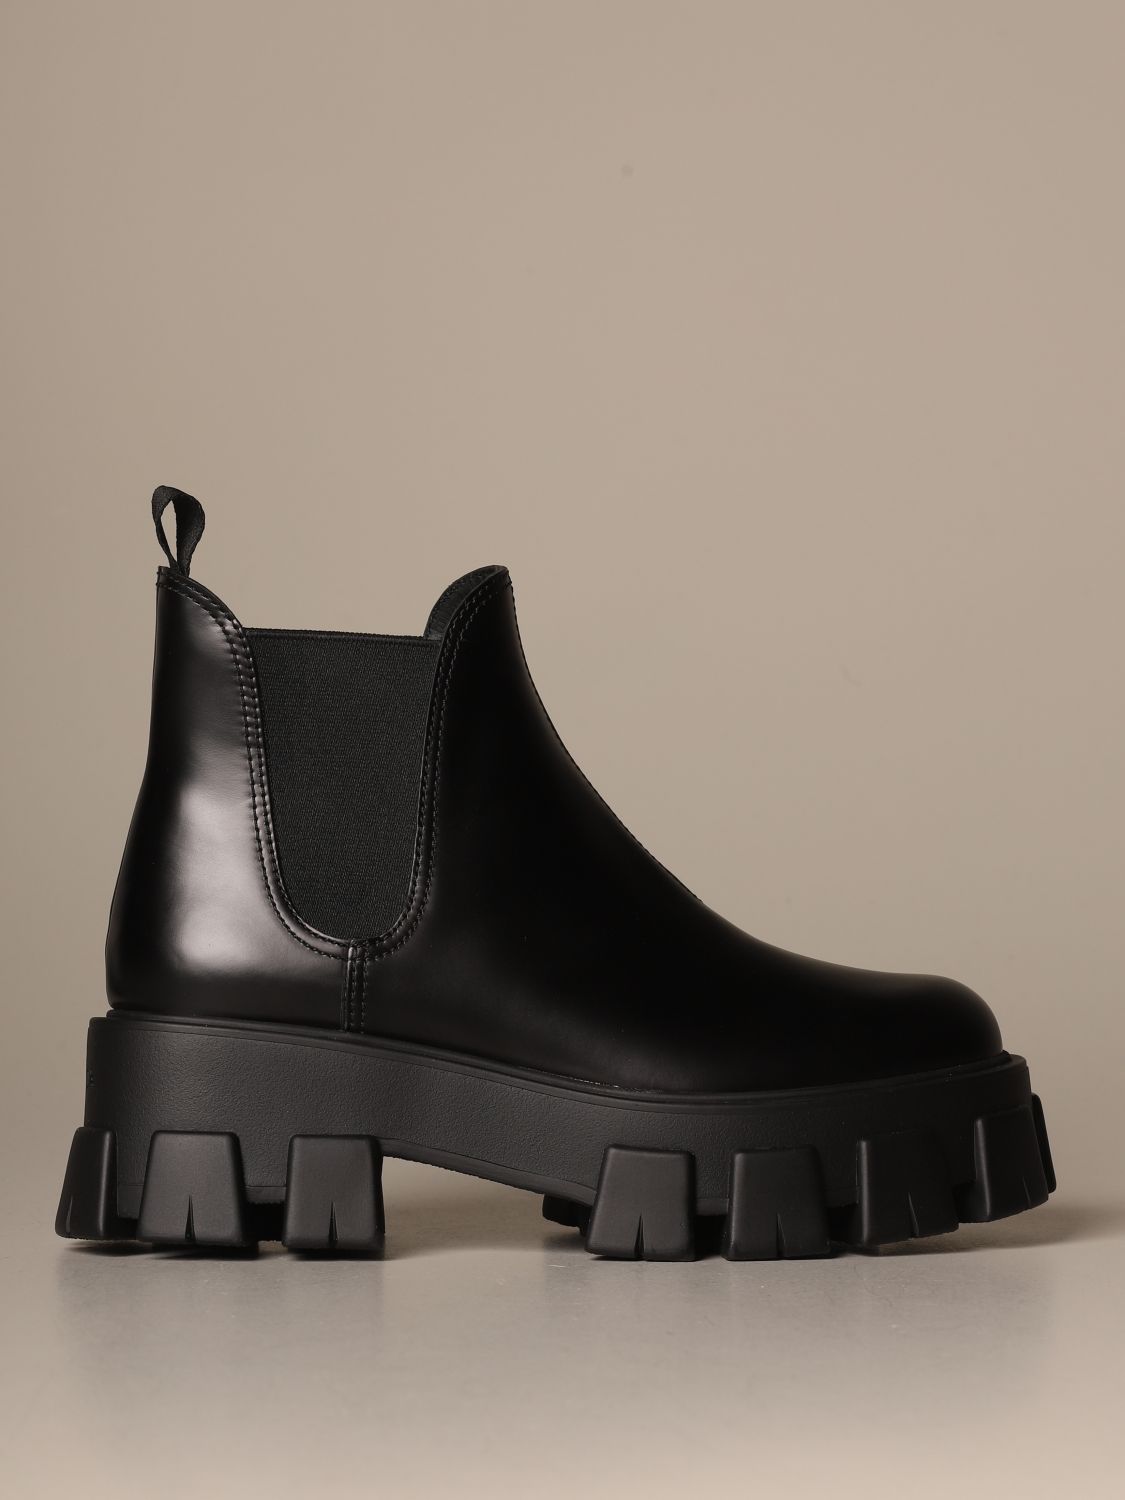 prada tronchetti leather ankle boots